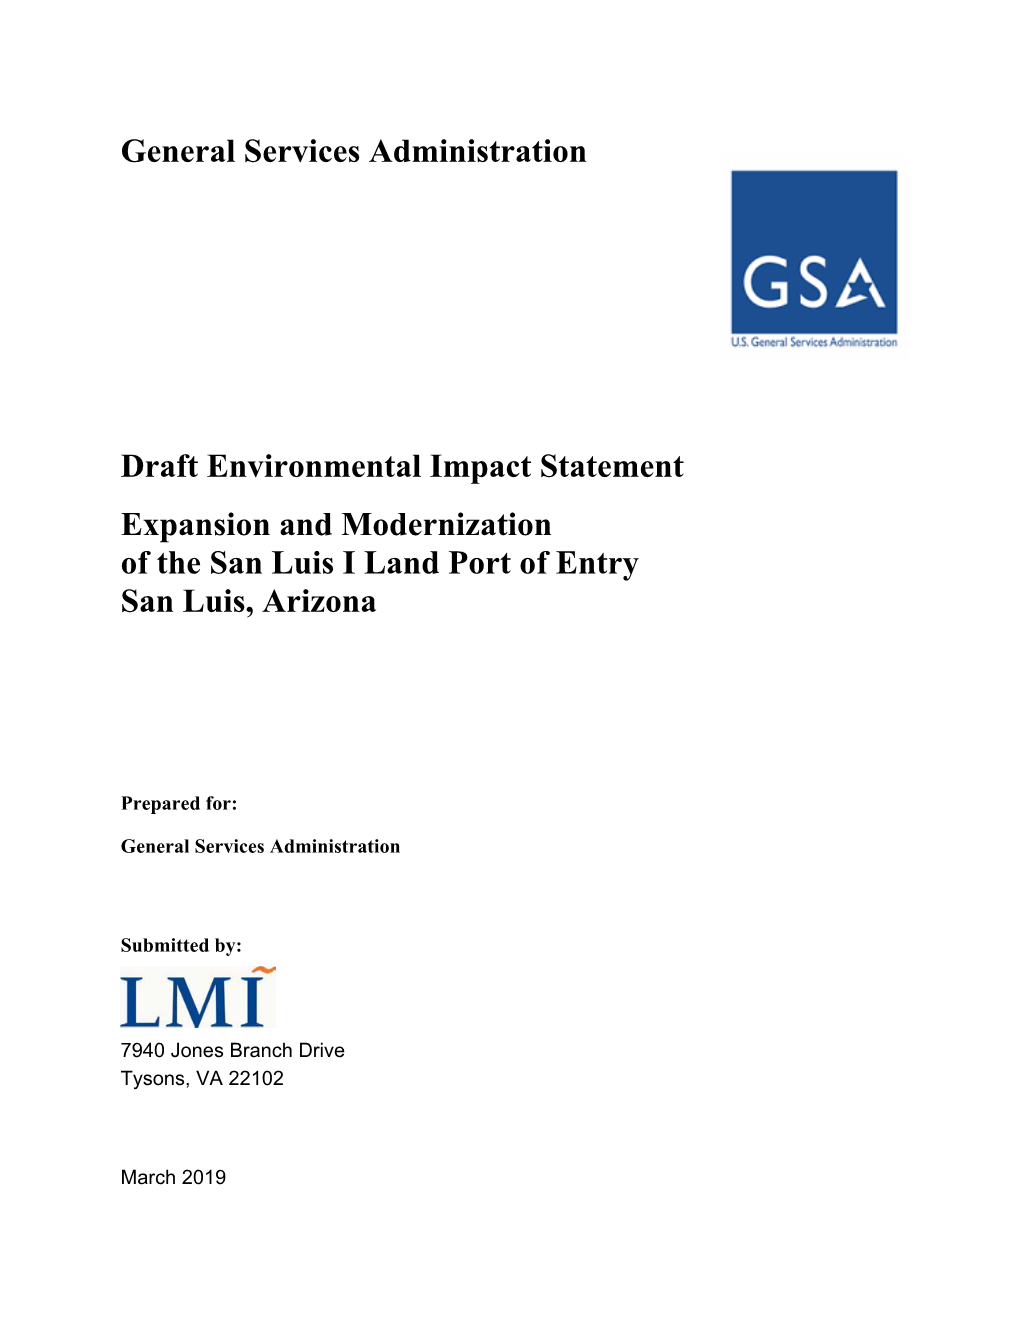 Original Draft Environmental Impact Statement